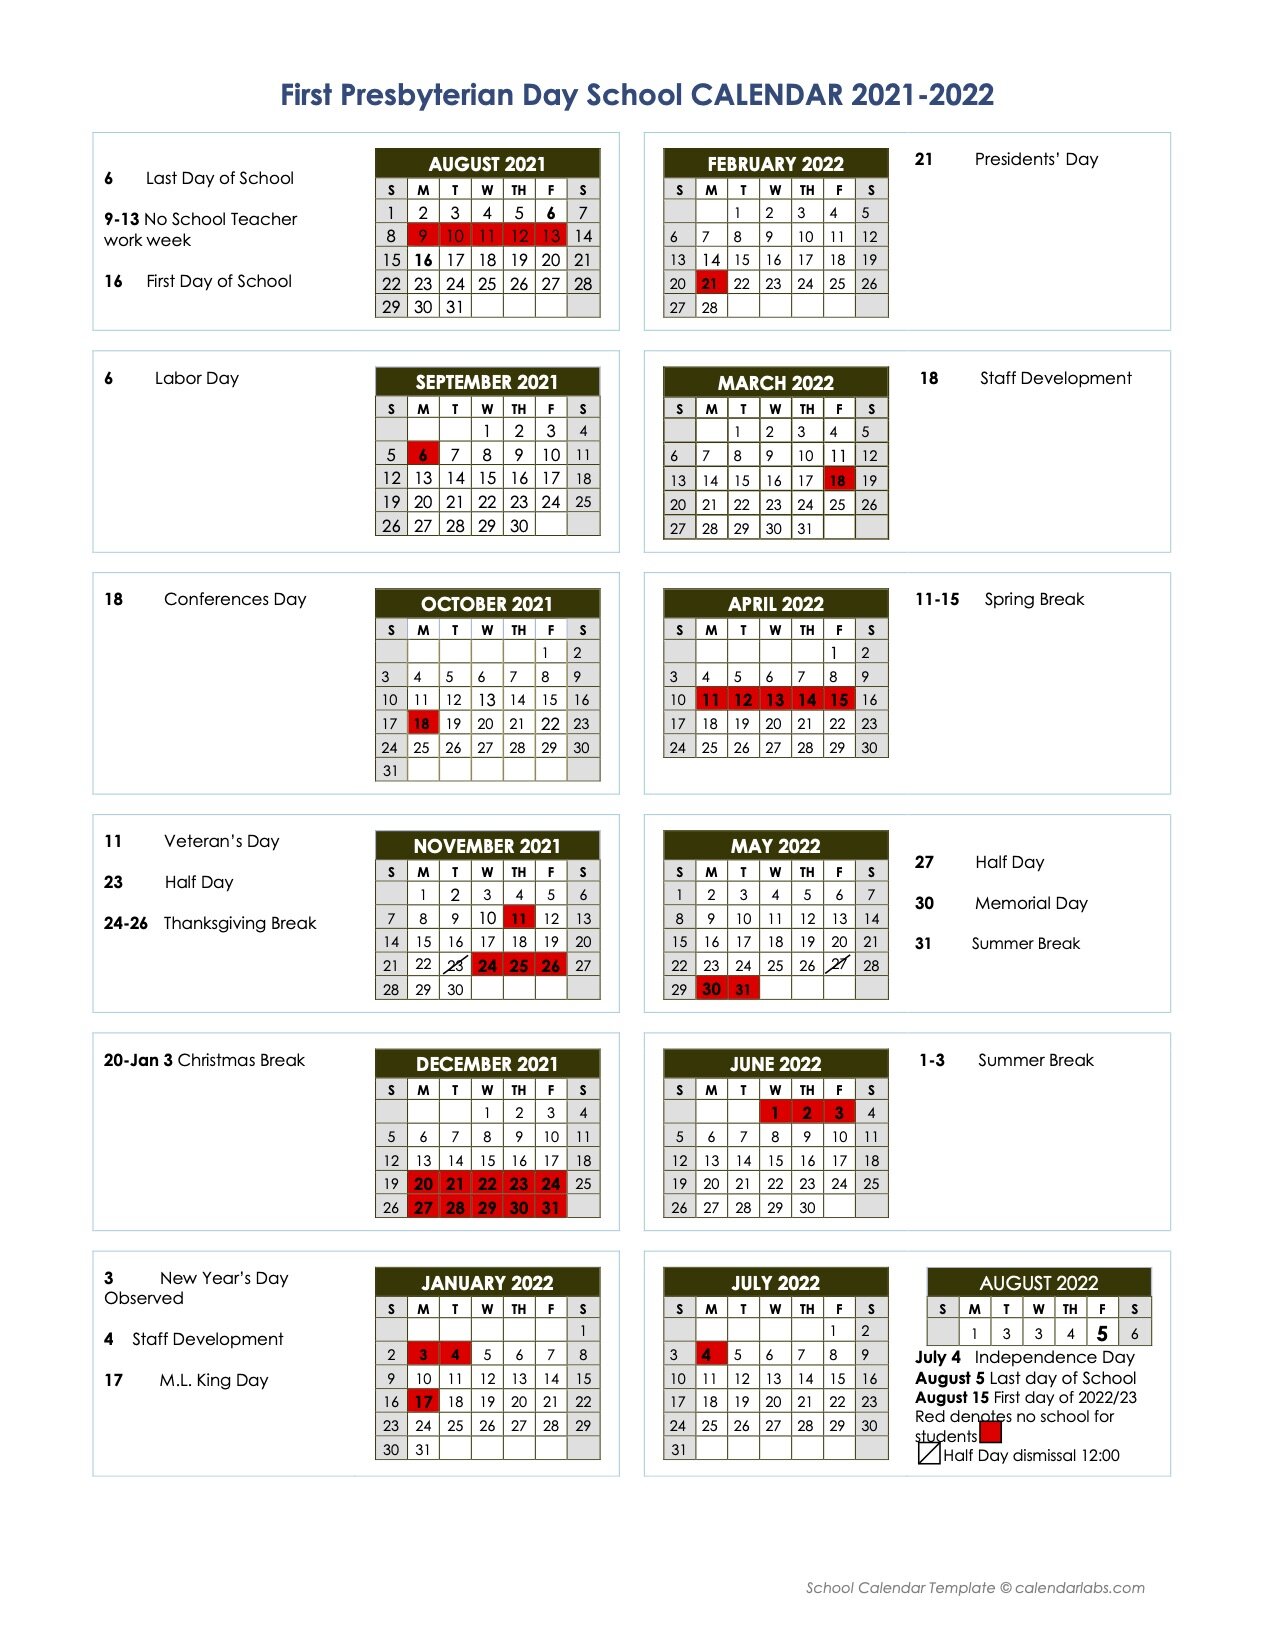 Presbyterian Calendar 2022 2021-2022 Academic Calendar — First Presbyterian Day School